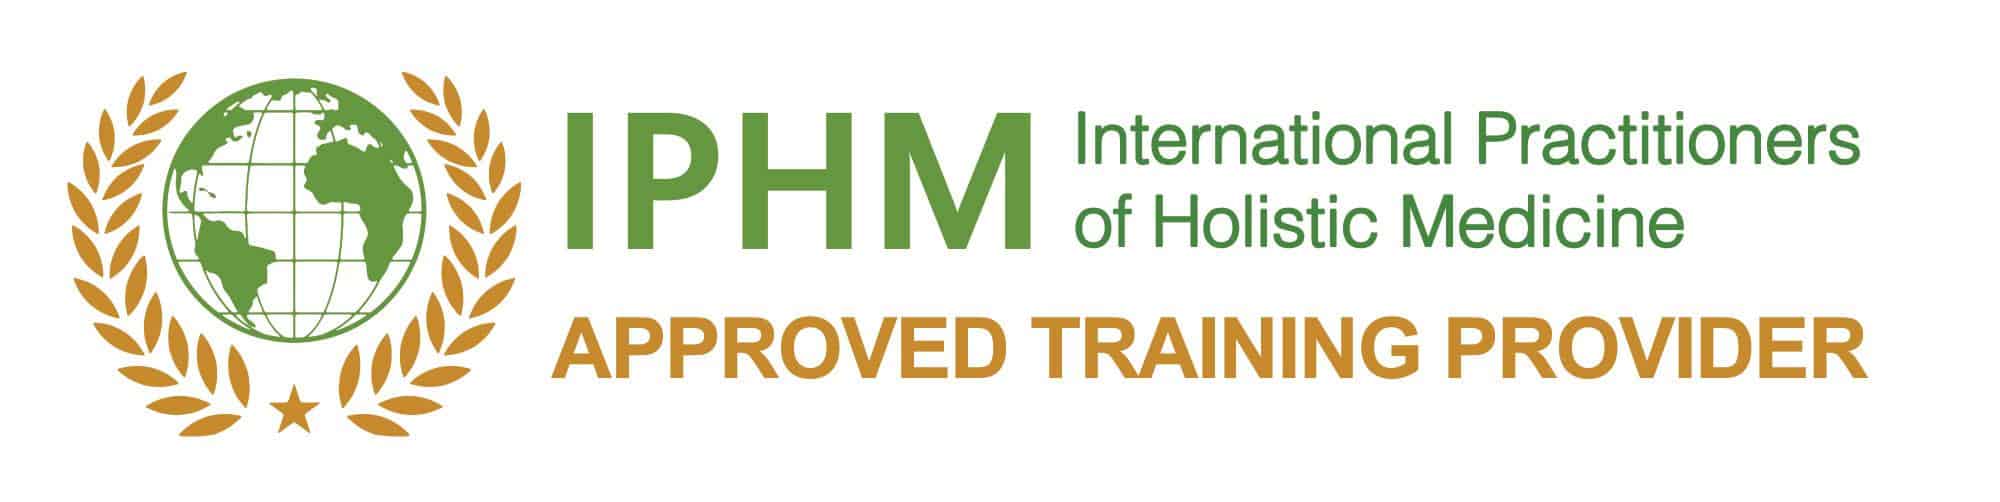 iphm logo approved trainingprovider horiz